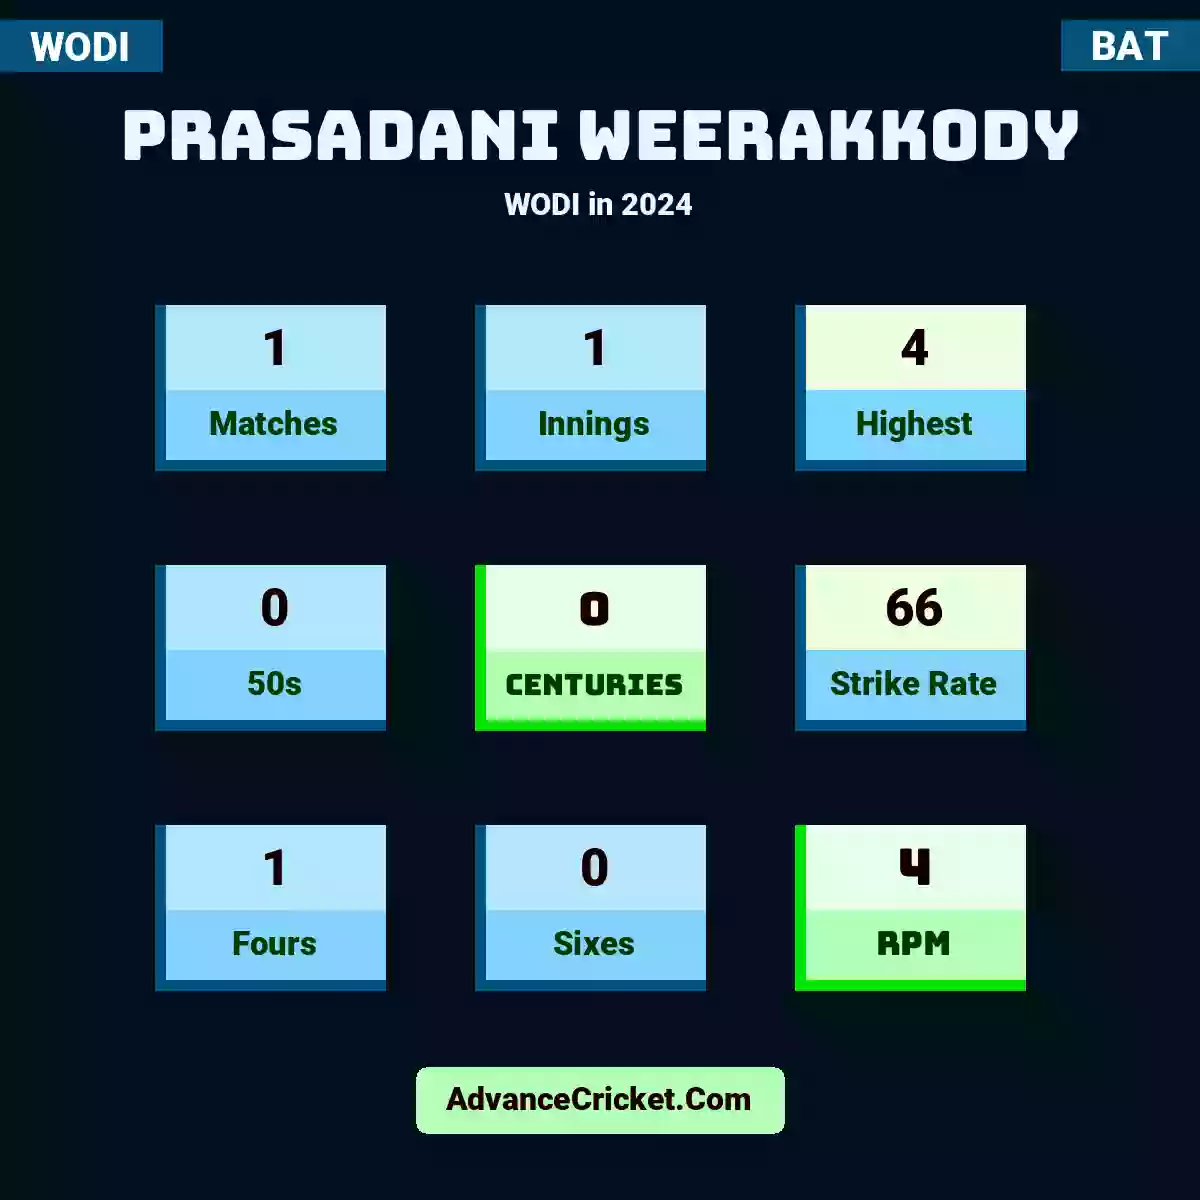 Prasadani Weerakkody WODI  in 2024, Prasadani Weerakkody played 1 matches, scored 4 runs as highest, 0 half-centuries, and 0 centuries, with a strike rate of 66. P.Weerakkody hit 1 fours and 0 sixes, with an RPM of 4.